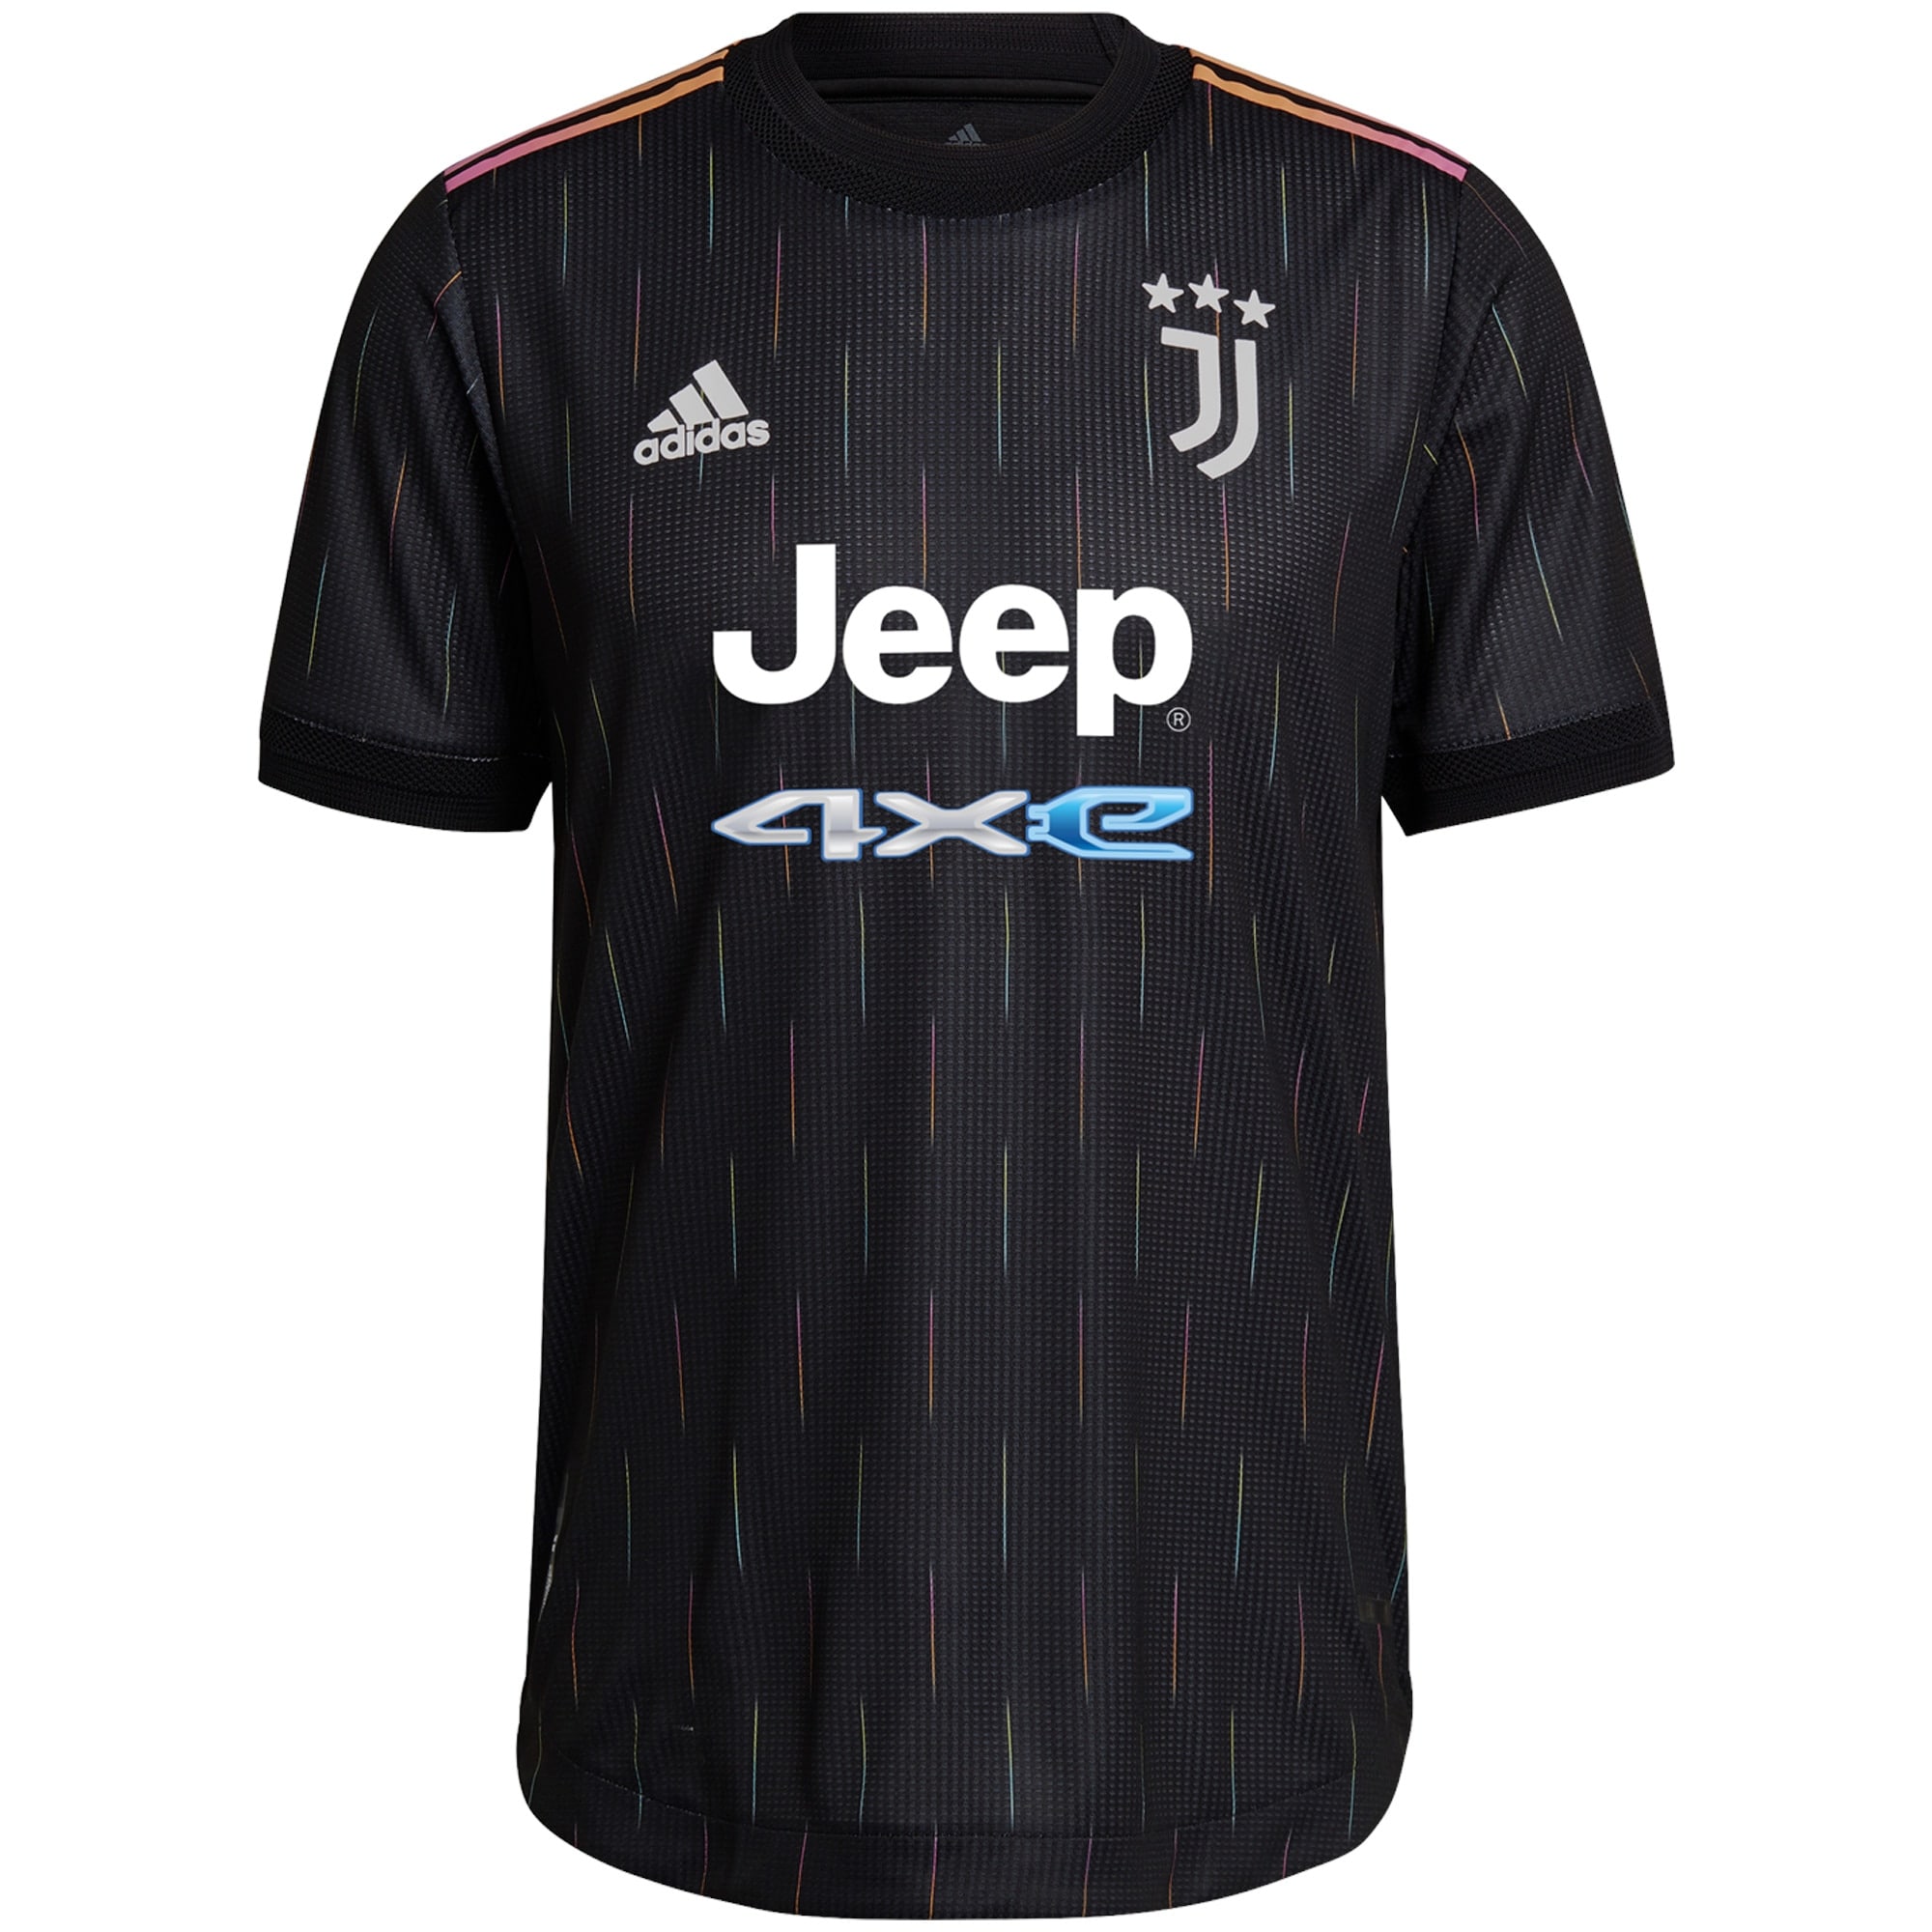 Juventus Away Authentic Shirt 2021-22 with De Ligt 4 printing